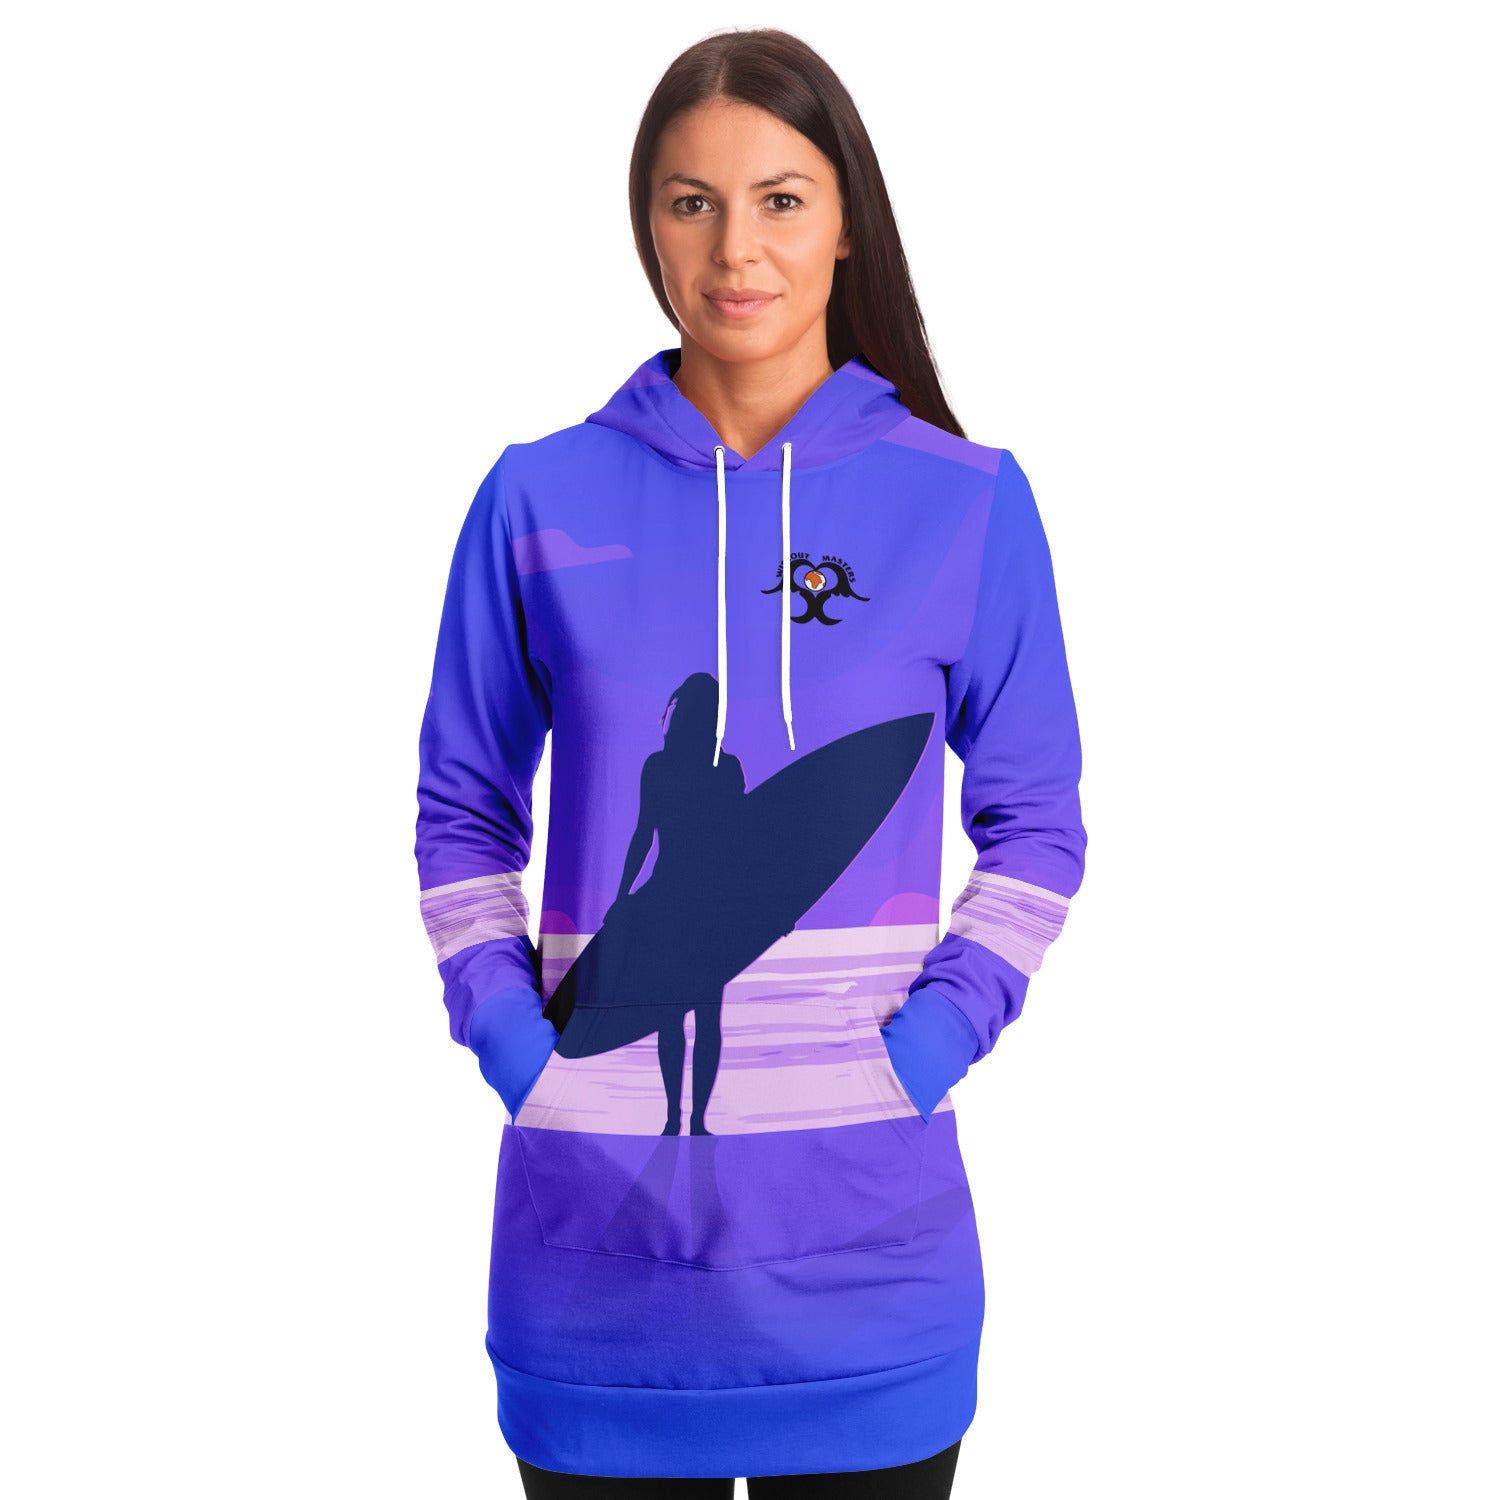 Purple longline surf hoodie